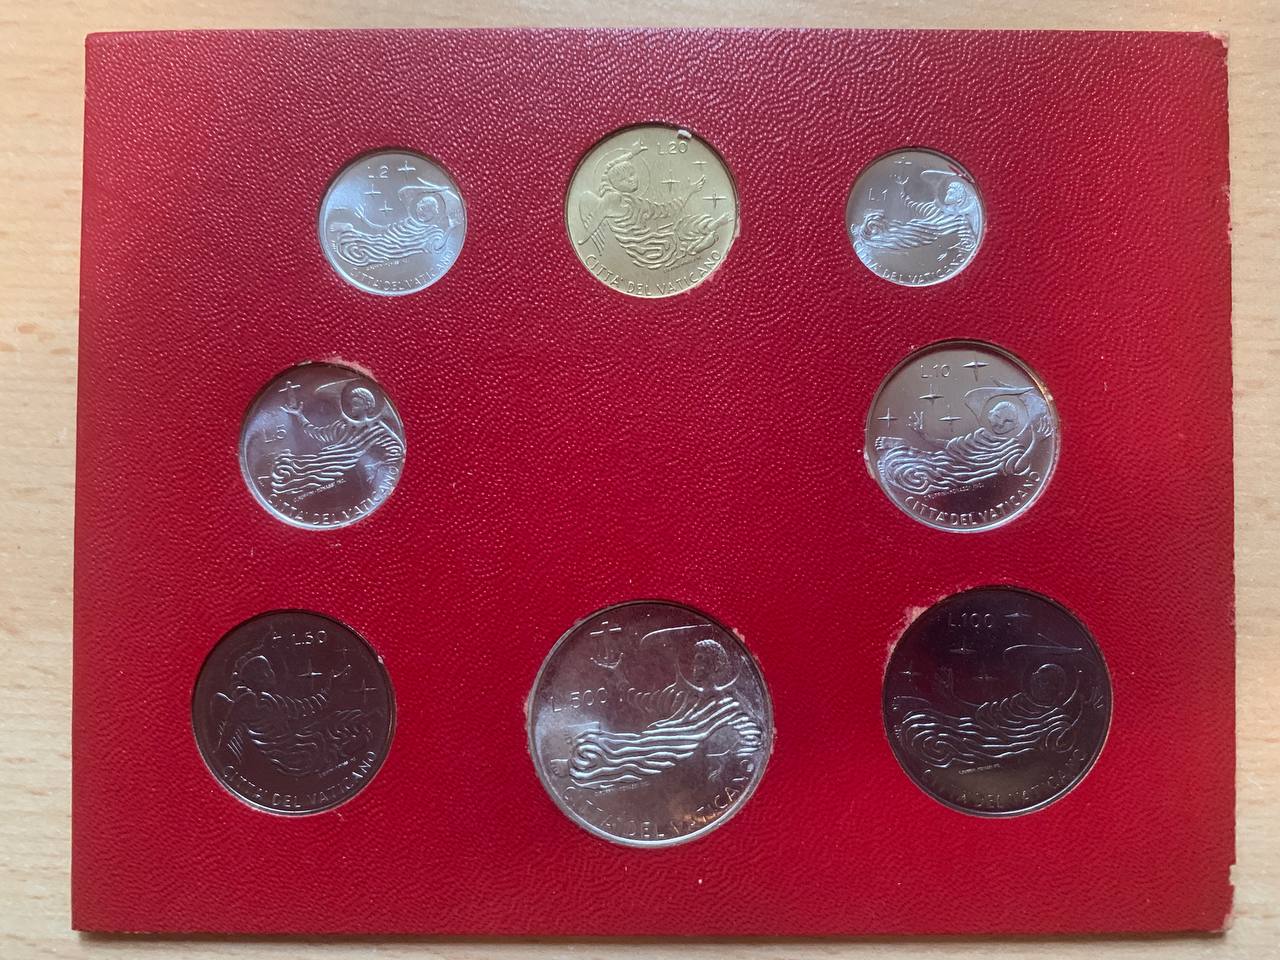  Vatikan 1969 Coin set BU (8 coins)   